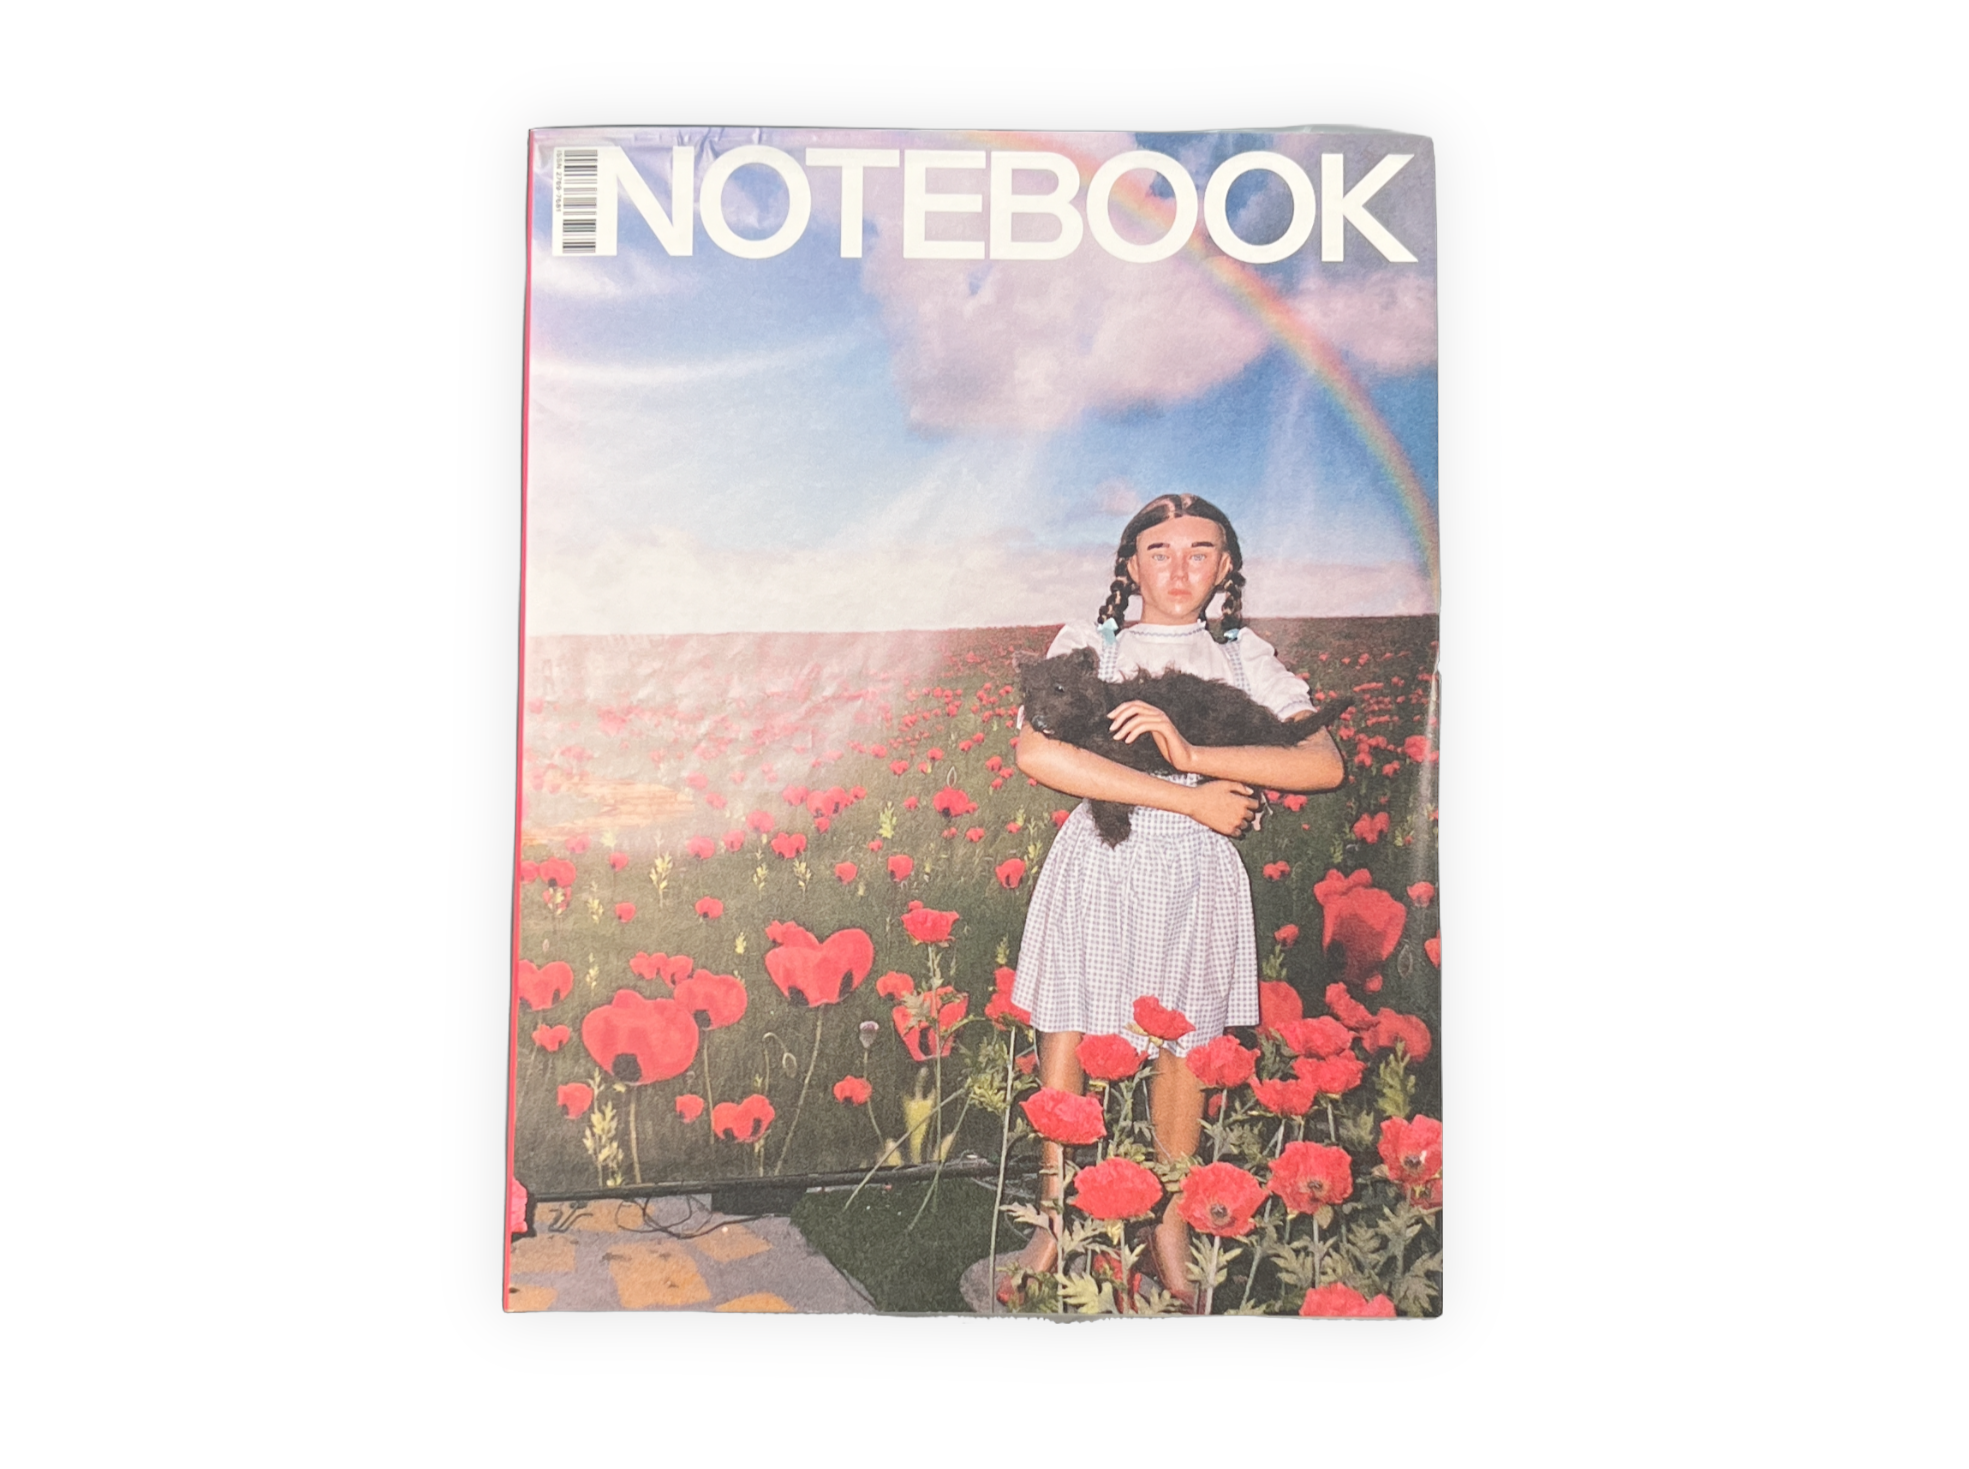 Notebook (5) by Mubi